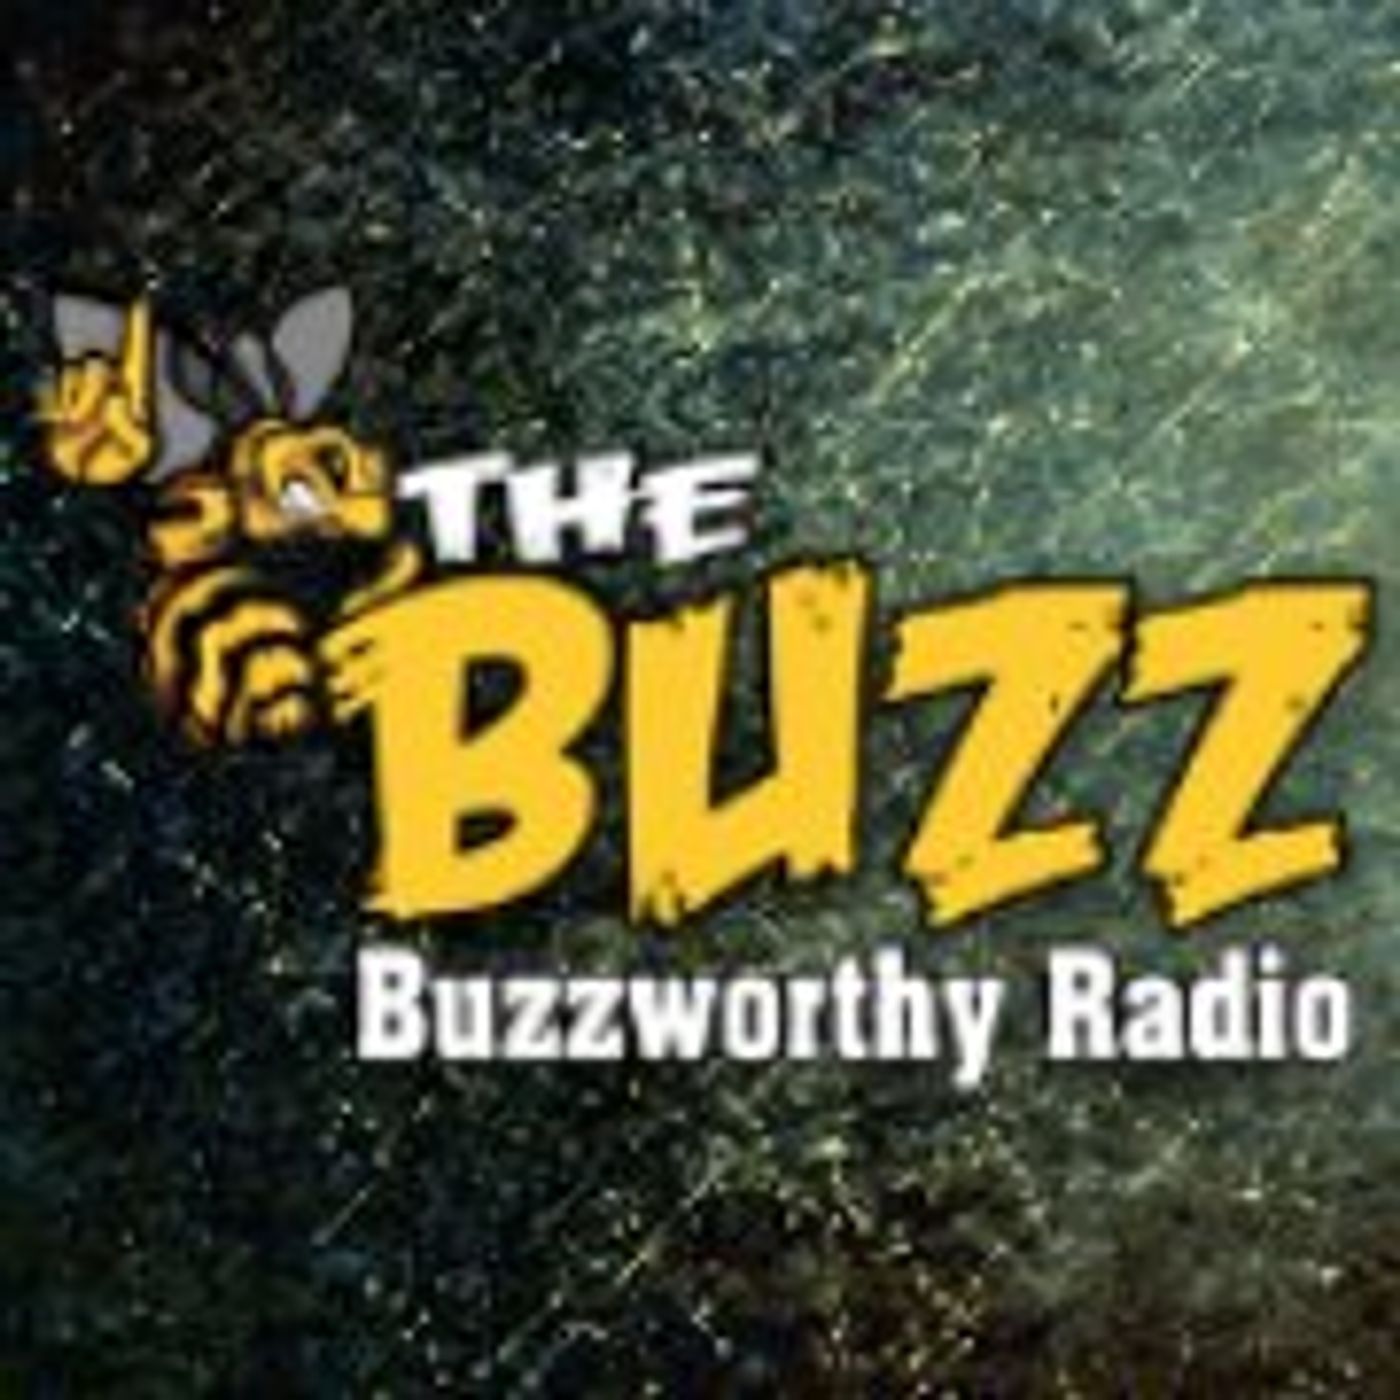 The Buzz - BuzzWorthy Radio